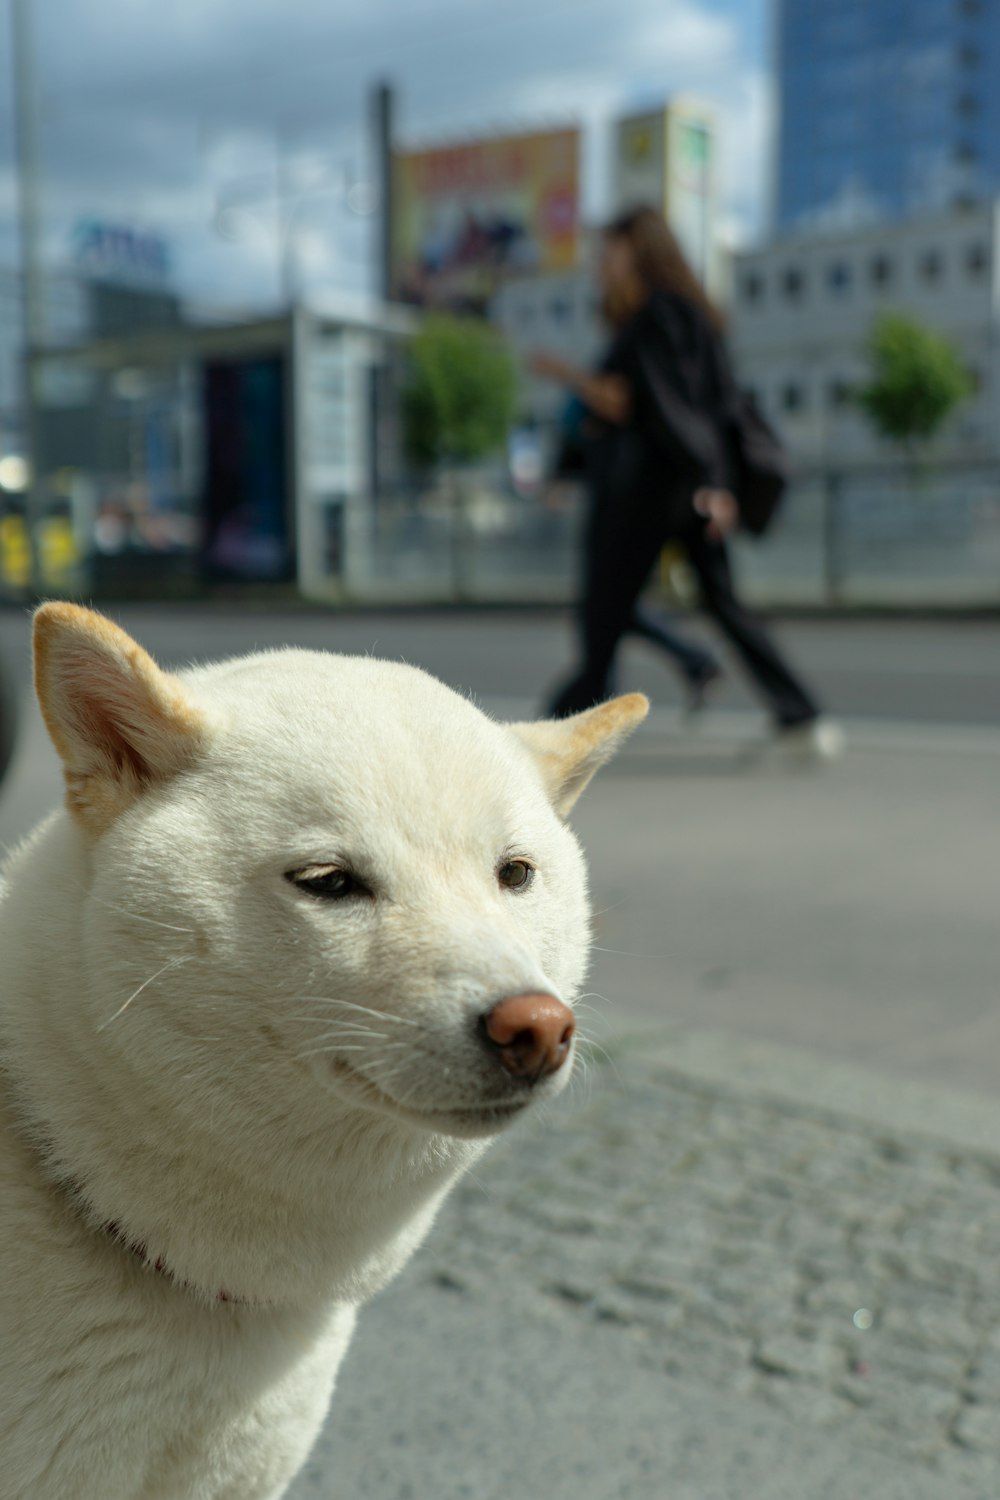 a close up of a dog on a city street